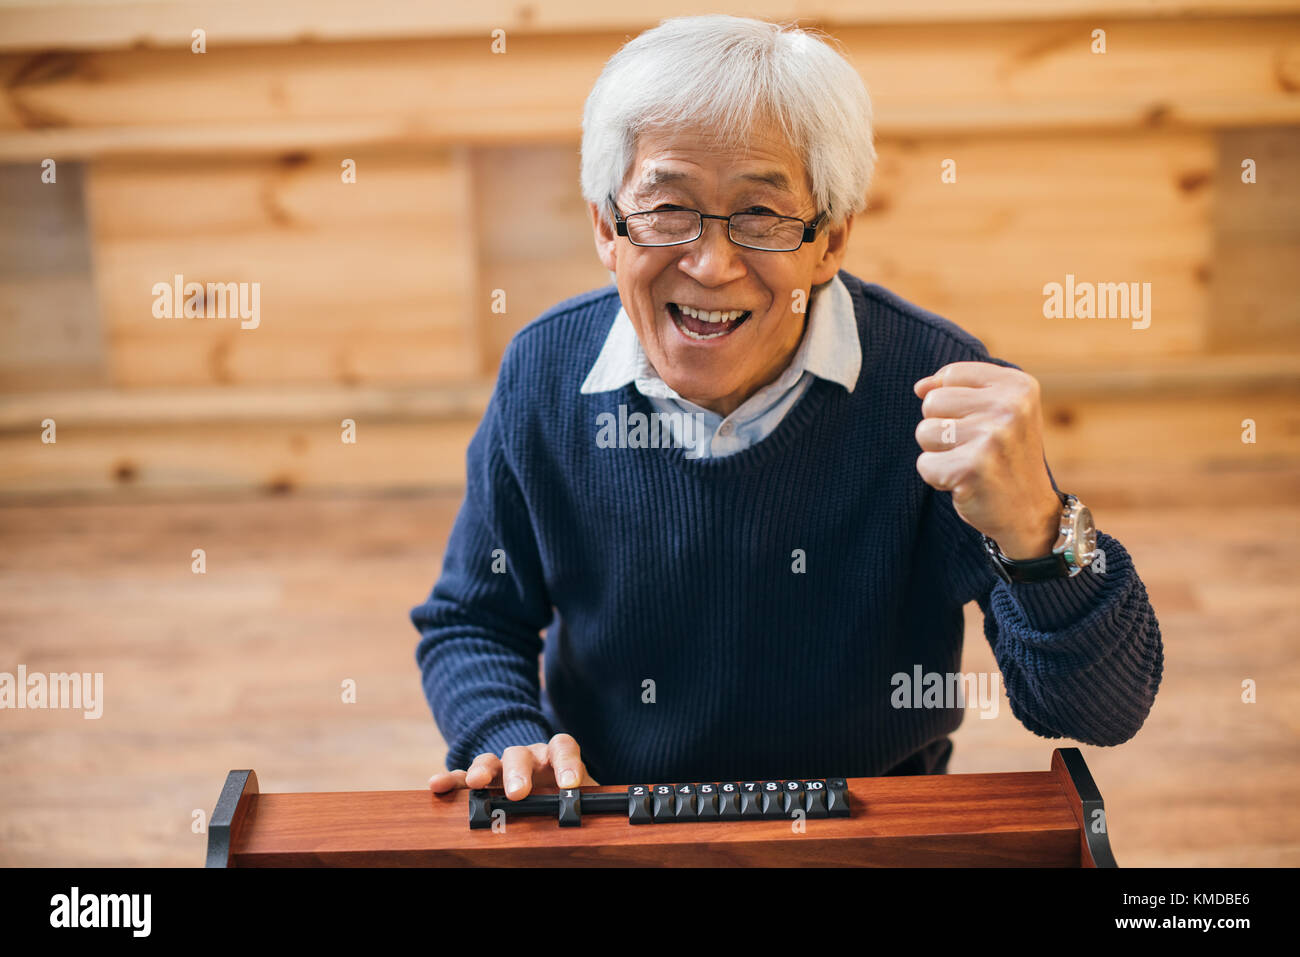 asian man celebrating victory Stock Photo